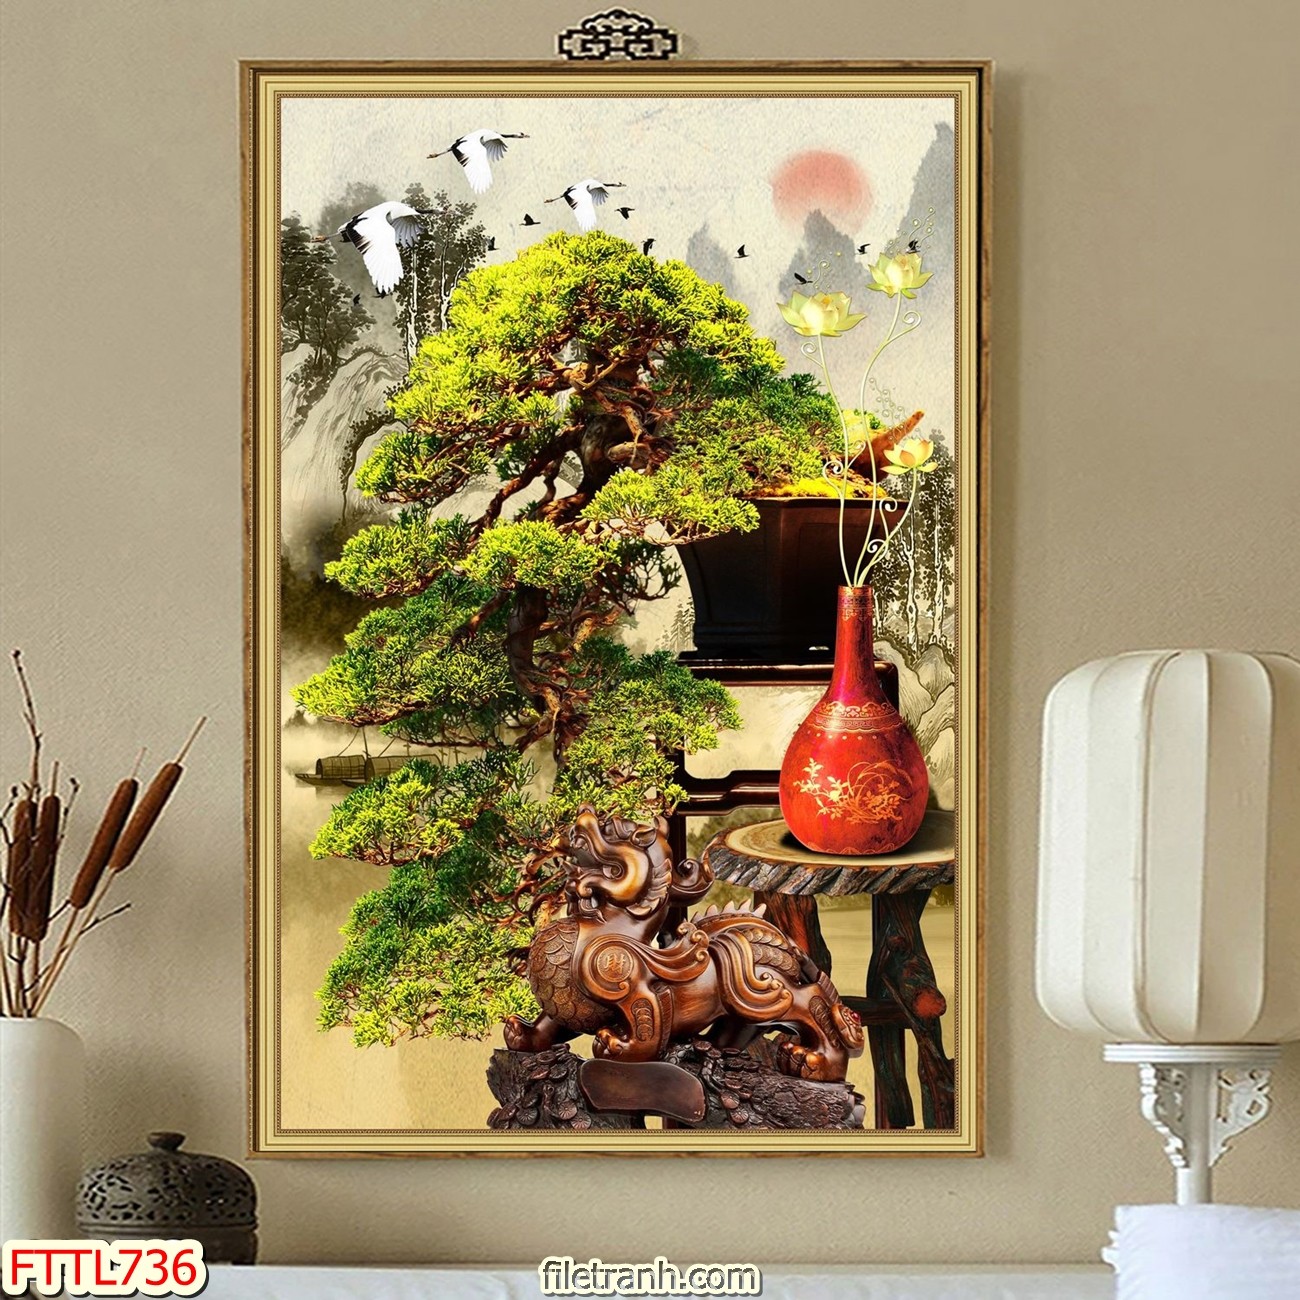 https://filetranh.com/file-tranh-chau-mai-bonsai/file-tranh-chau-mai-bonsai-fttl736.html